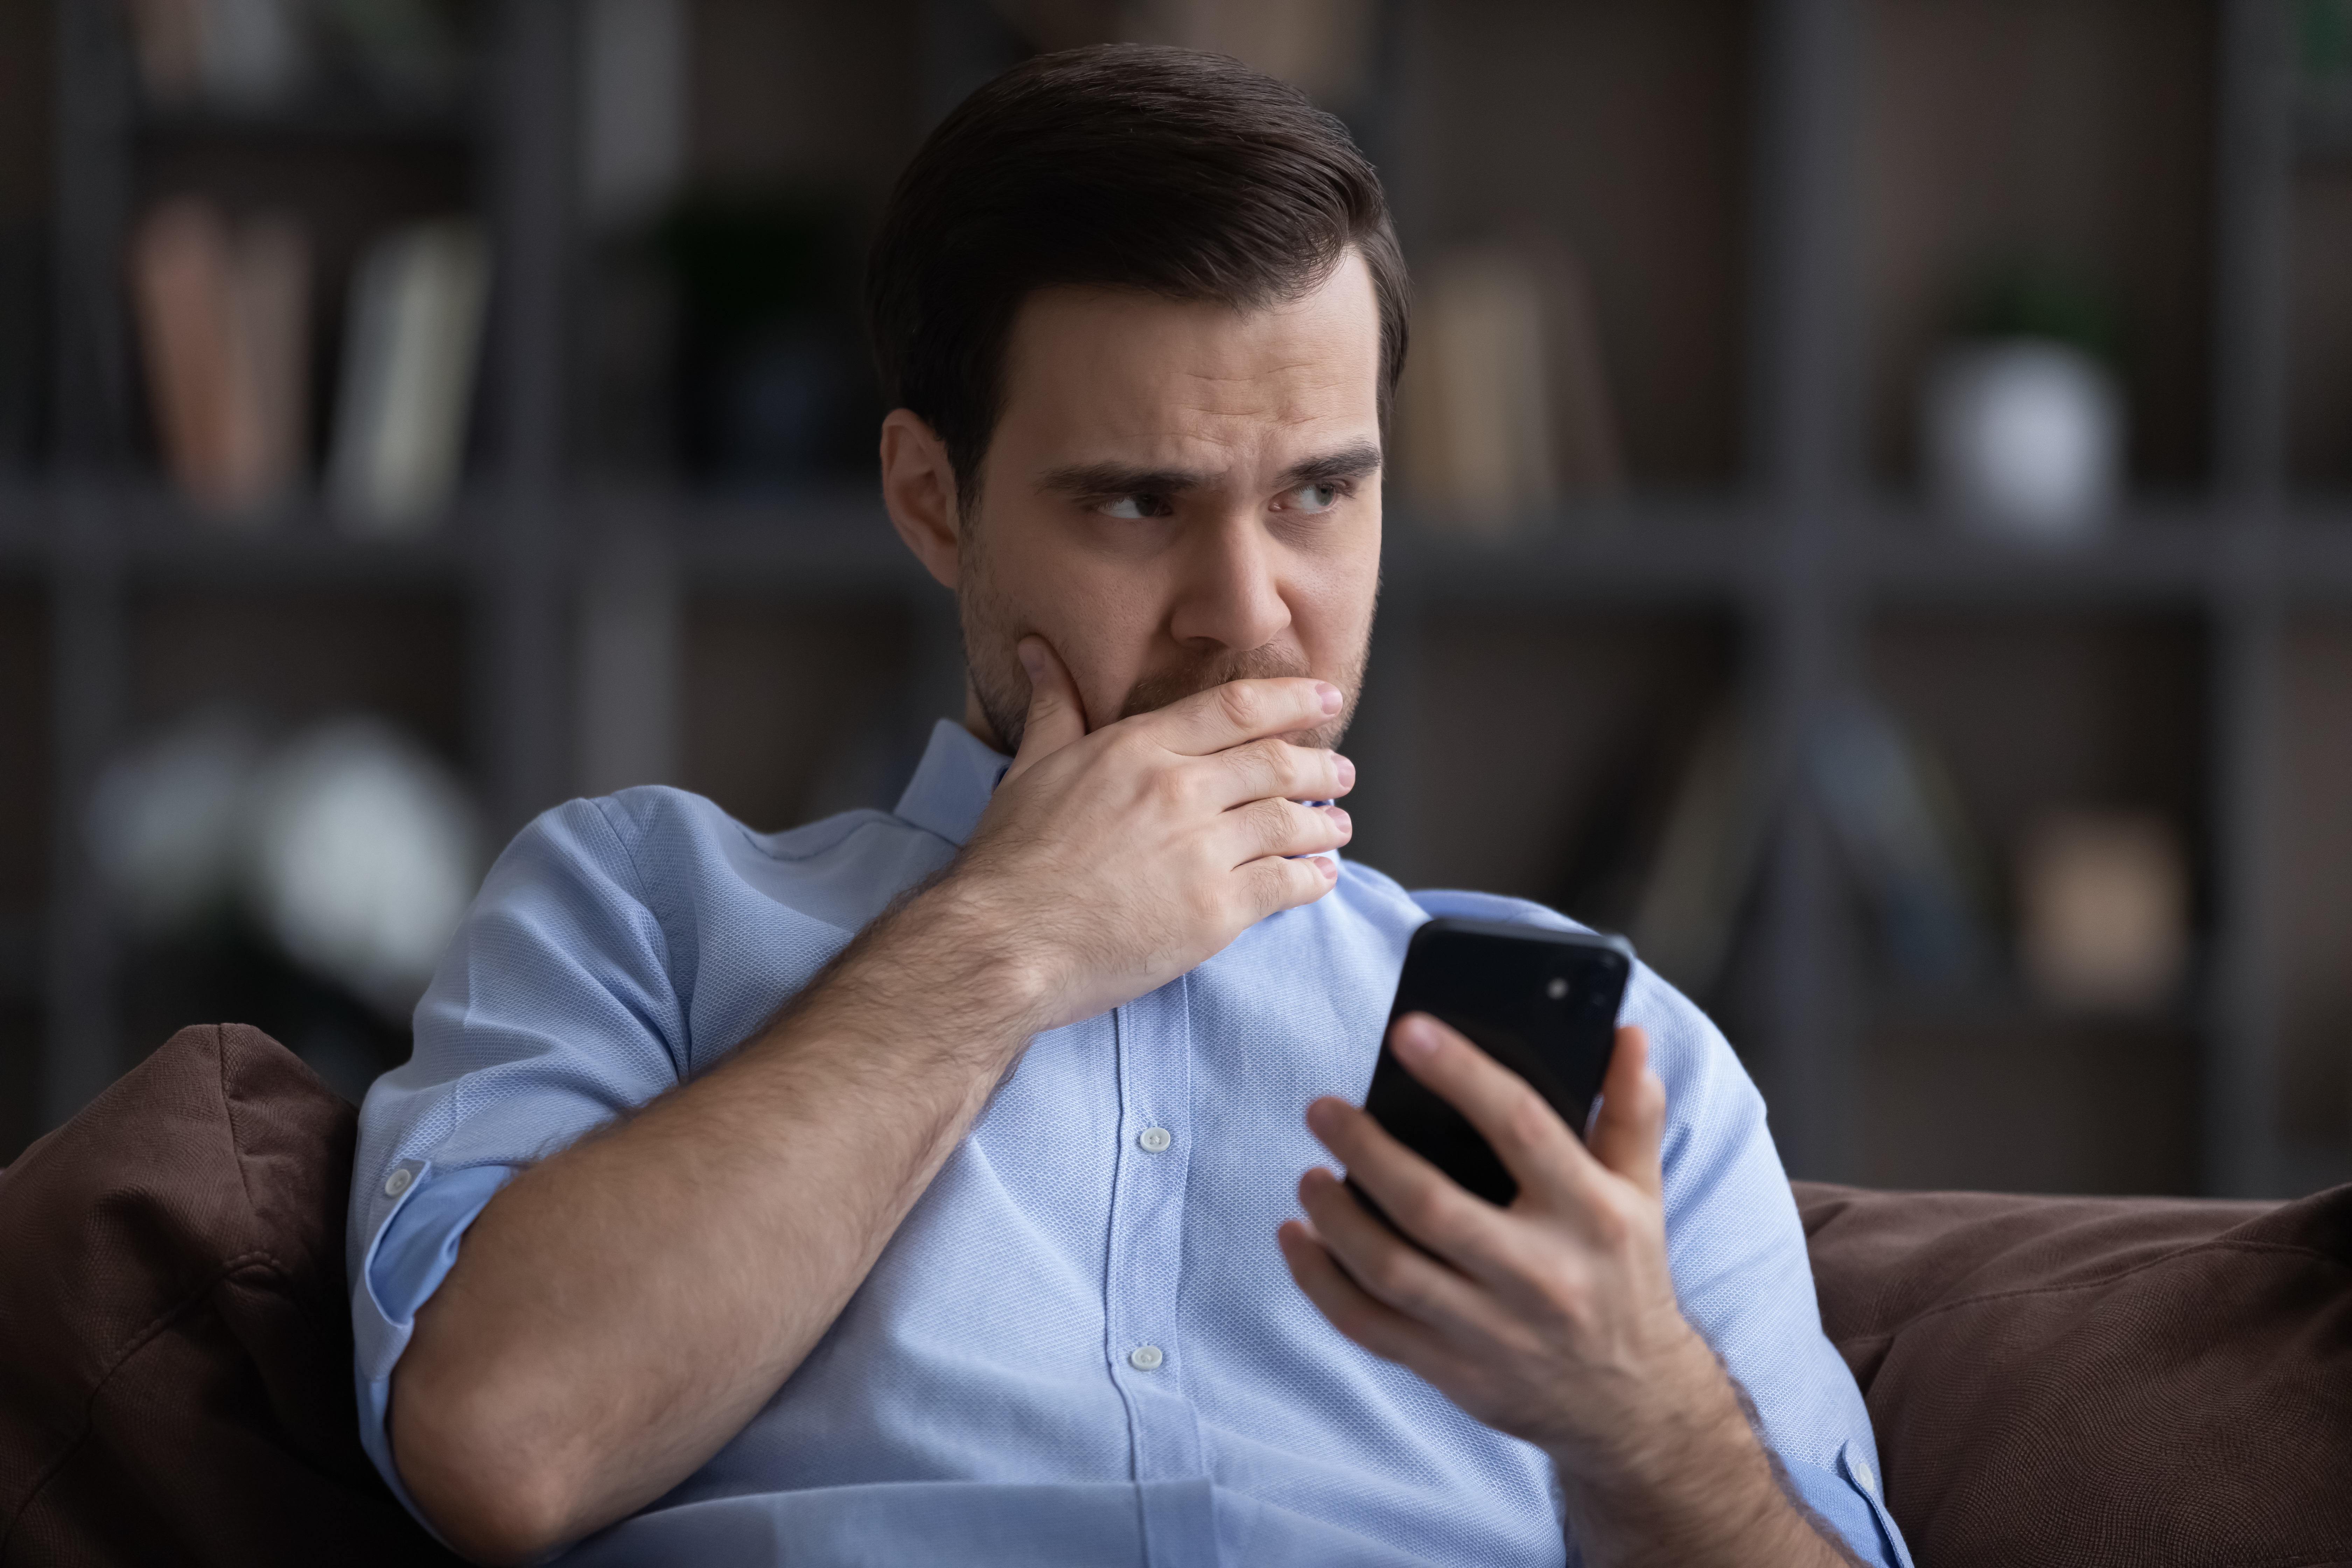 Besorgter Mann, der an etwas zweifelt, während er sein Telefon hält | Quelle: Shutterstock